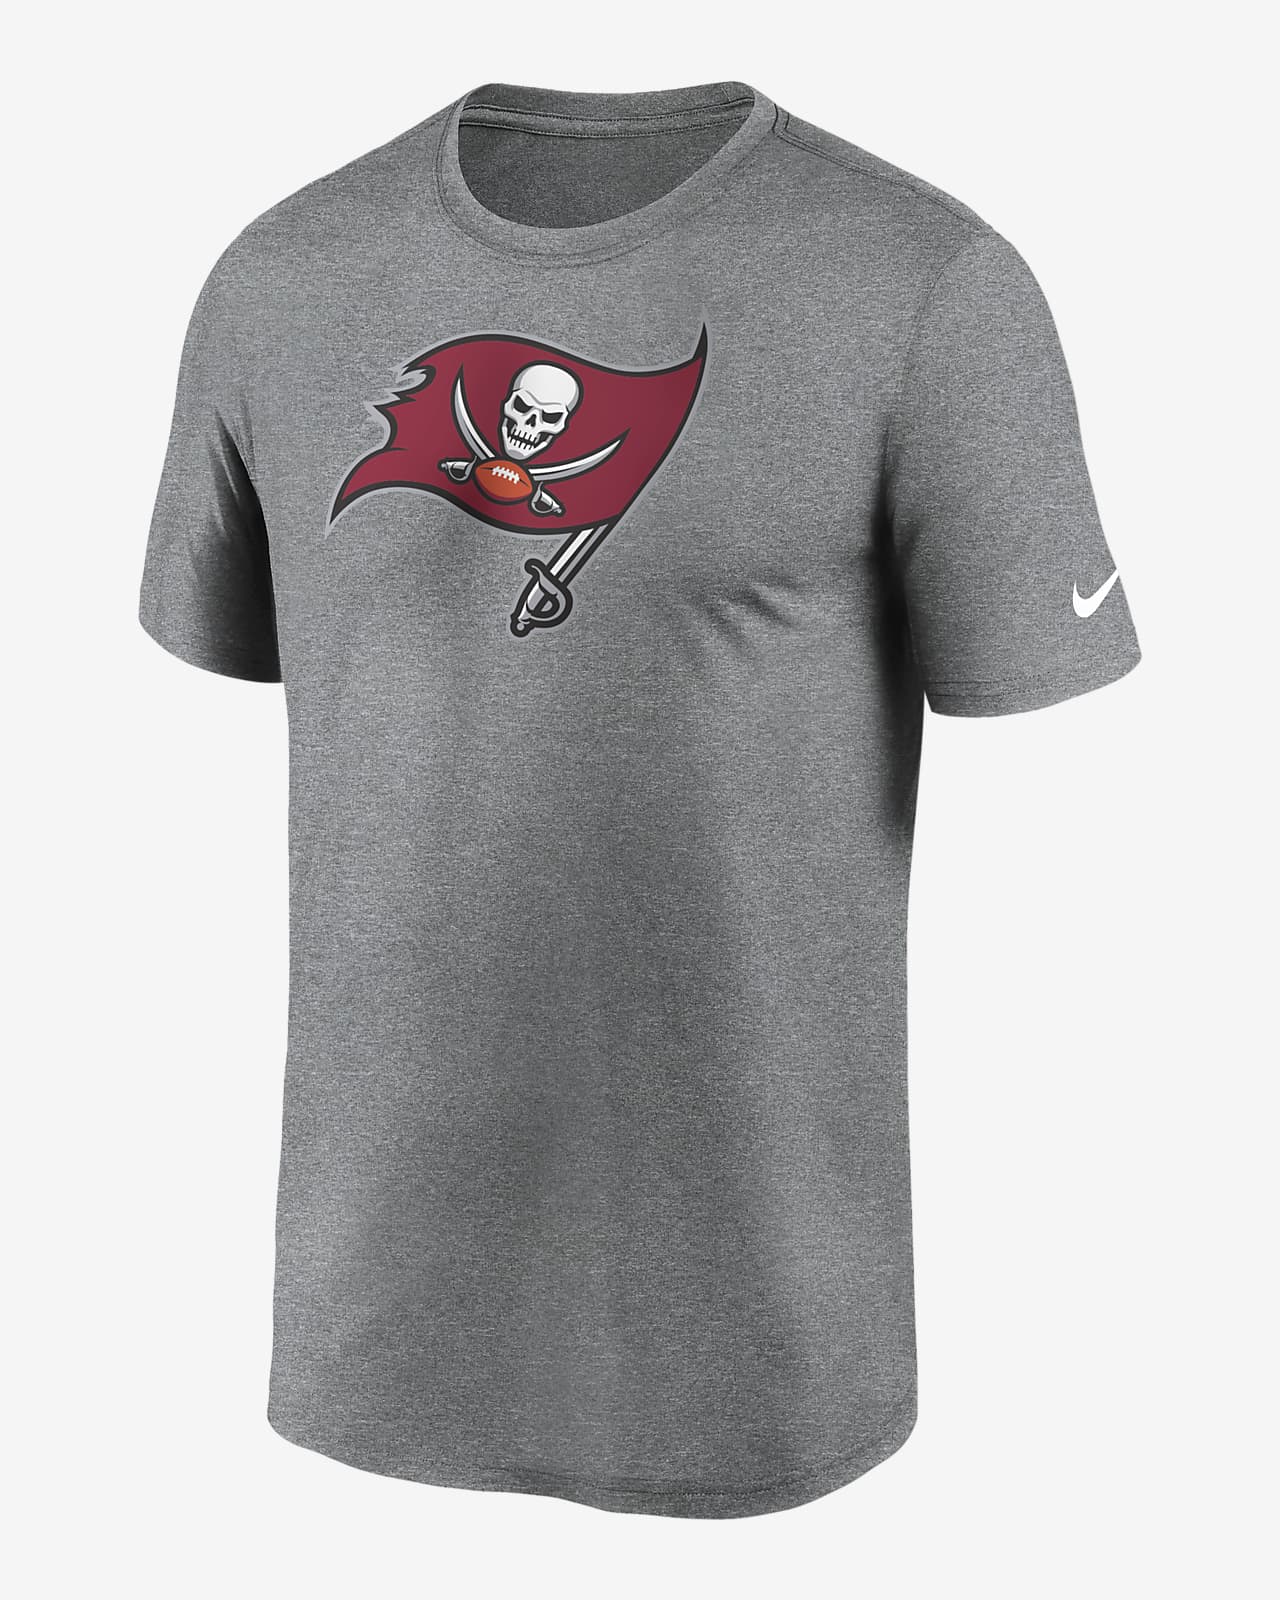 Nike Dri-FIT Logo Legend (NFL Tampa Bay Buccaneers) Men's T-Shirt